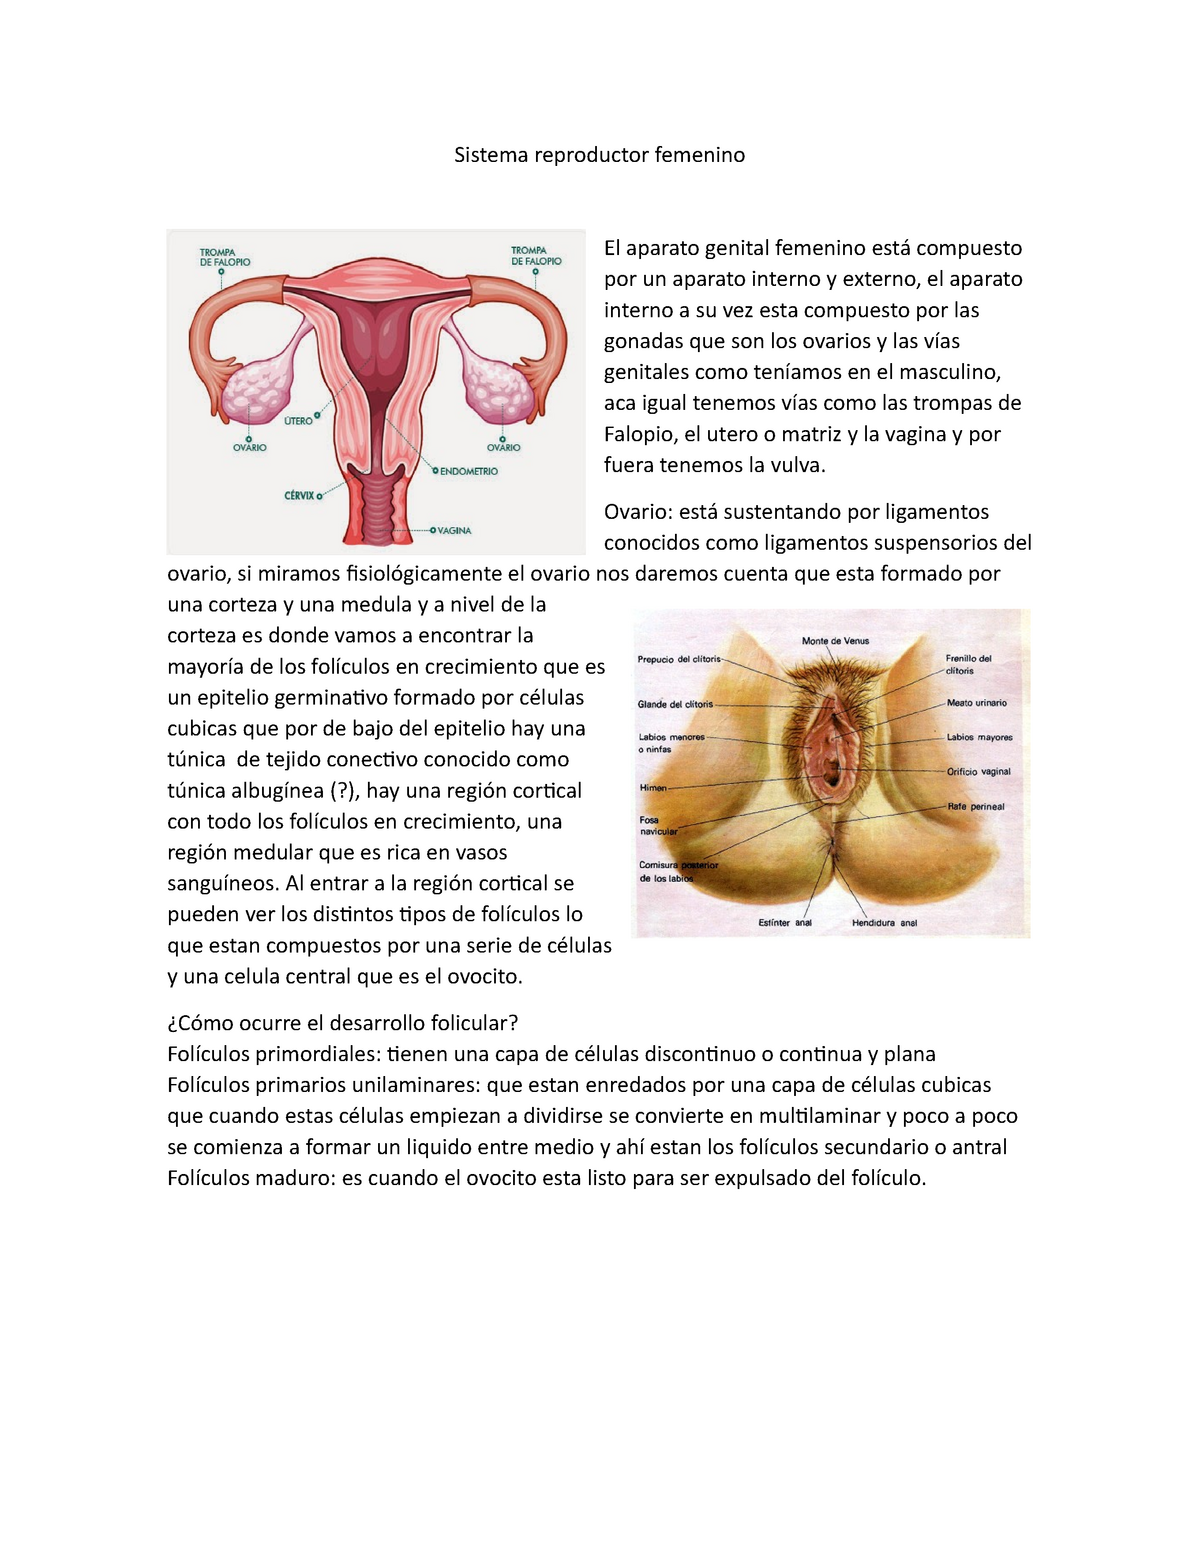 Sistema Reproductor Femenino Ciclo Menstrual Sistema Reproductor Femenino El Aparato Genital 2942